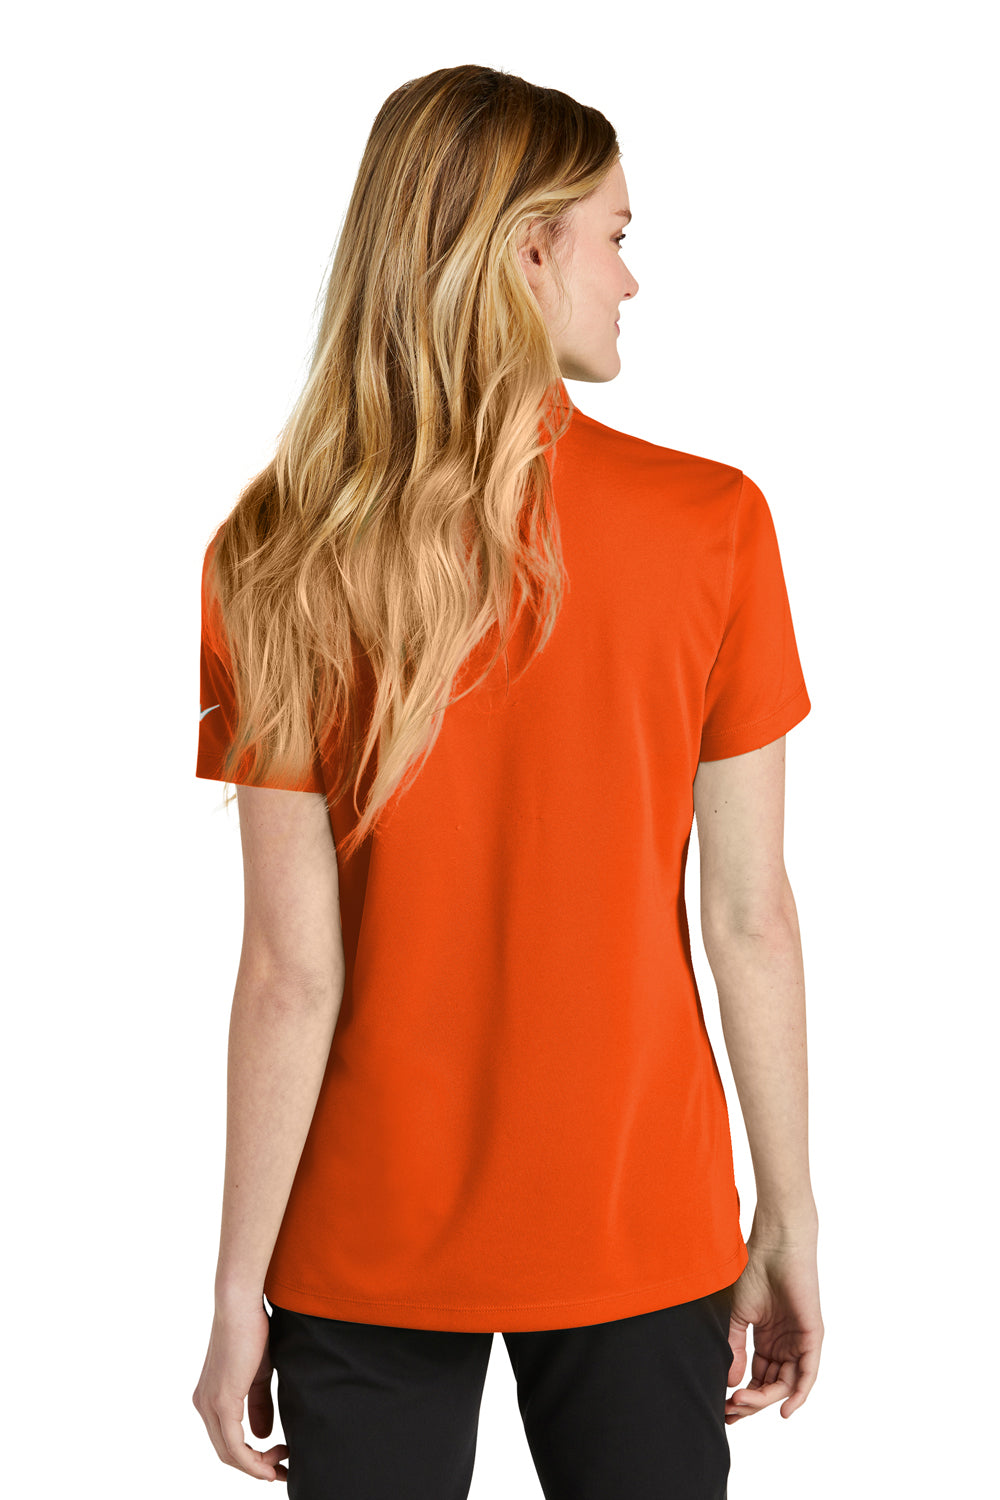 Nike NKDC1991 Womens Dri-Fit Moisture Wicking Micro Pique 2.0 Short Sleeve Polo Shirt Brilliant Orange Model Back